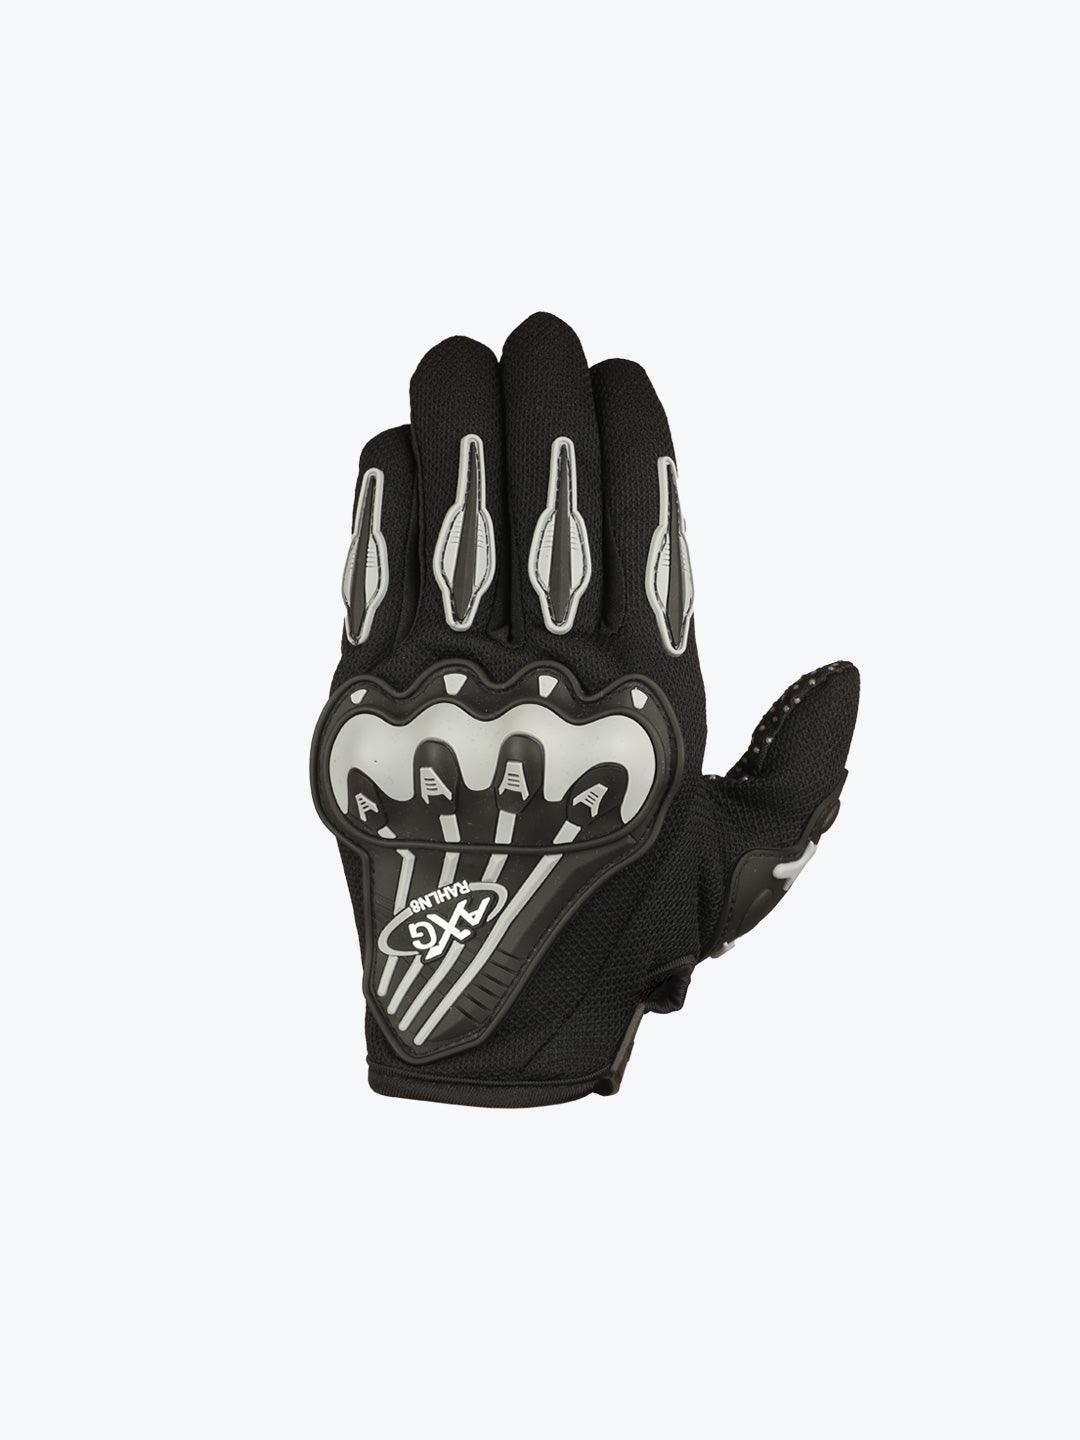 AXG Glove Black Grey - Moto Modz